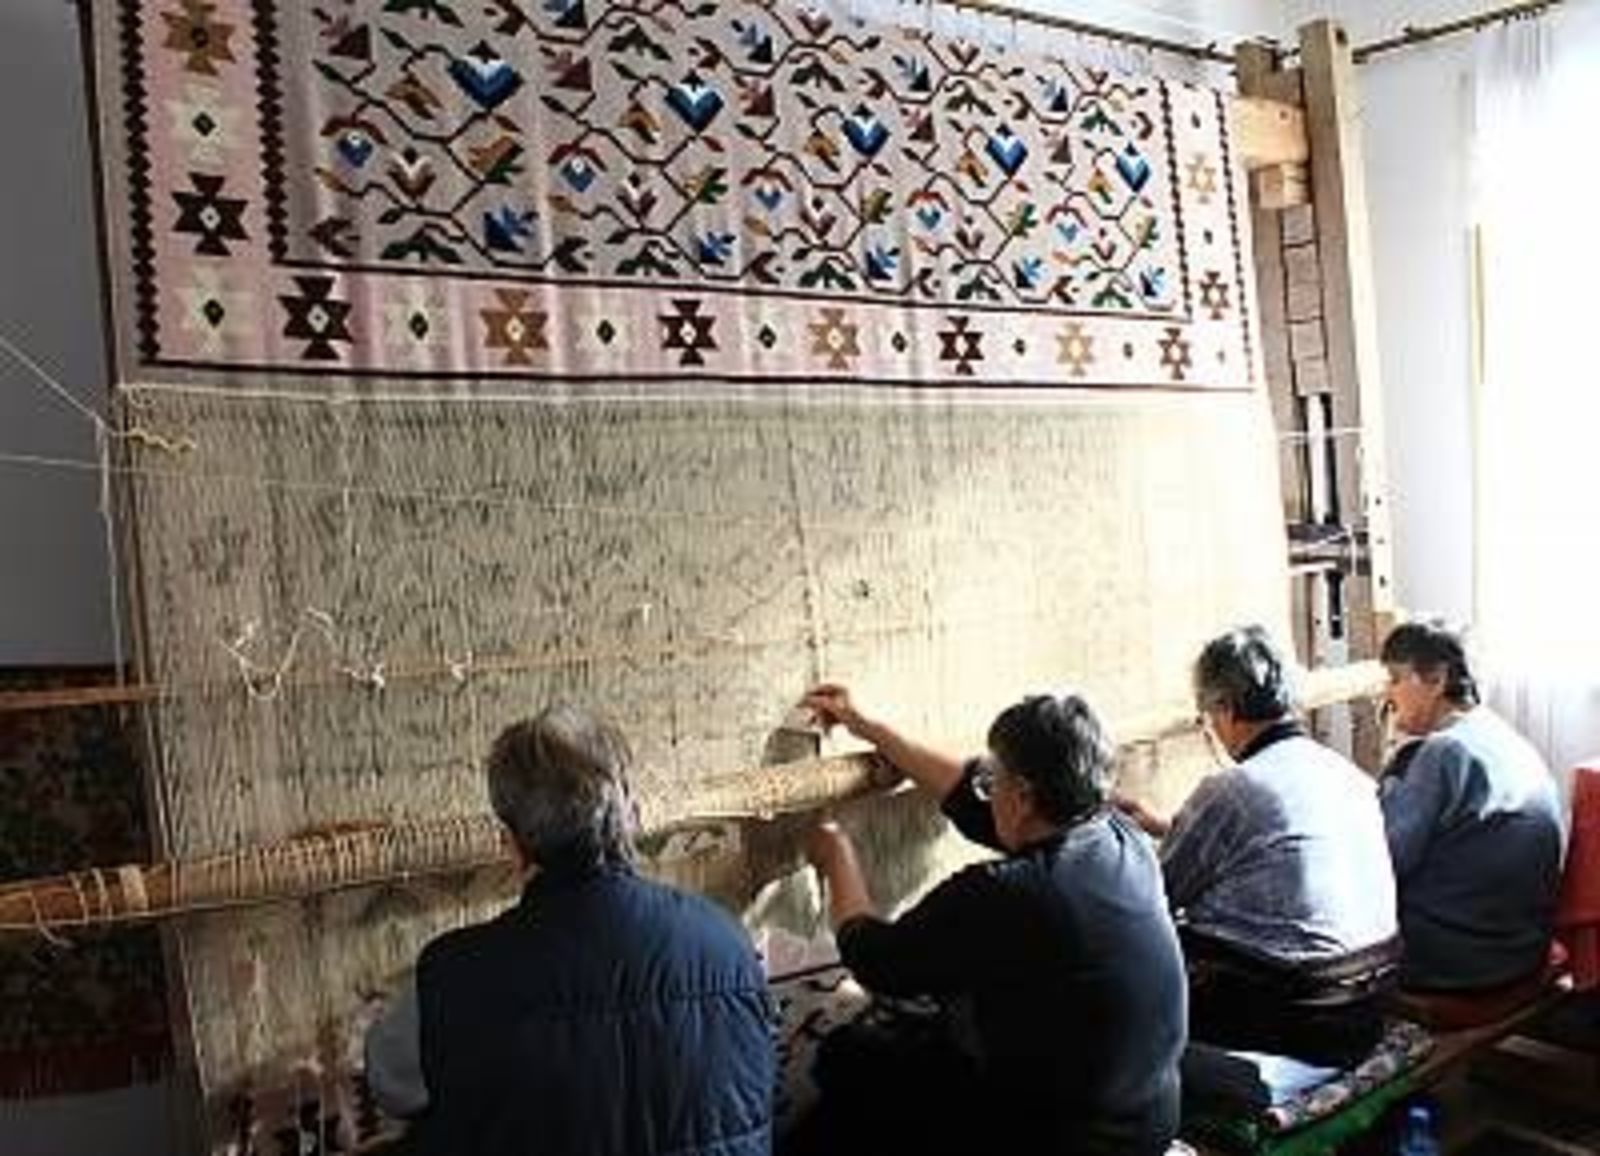 Chiprovski kilimi, the tradition of carpet-making in Chiprovtsi